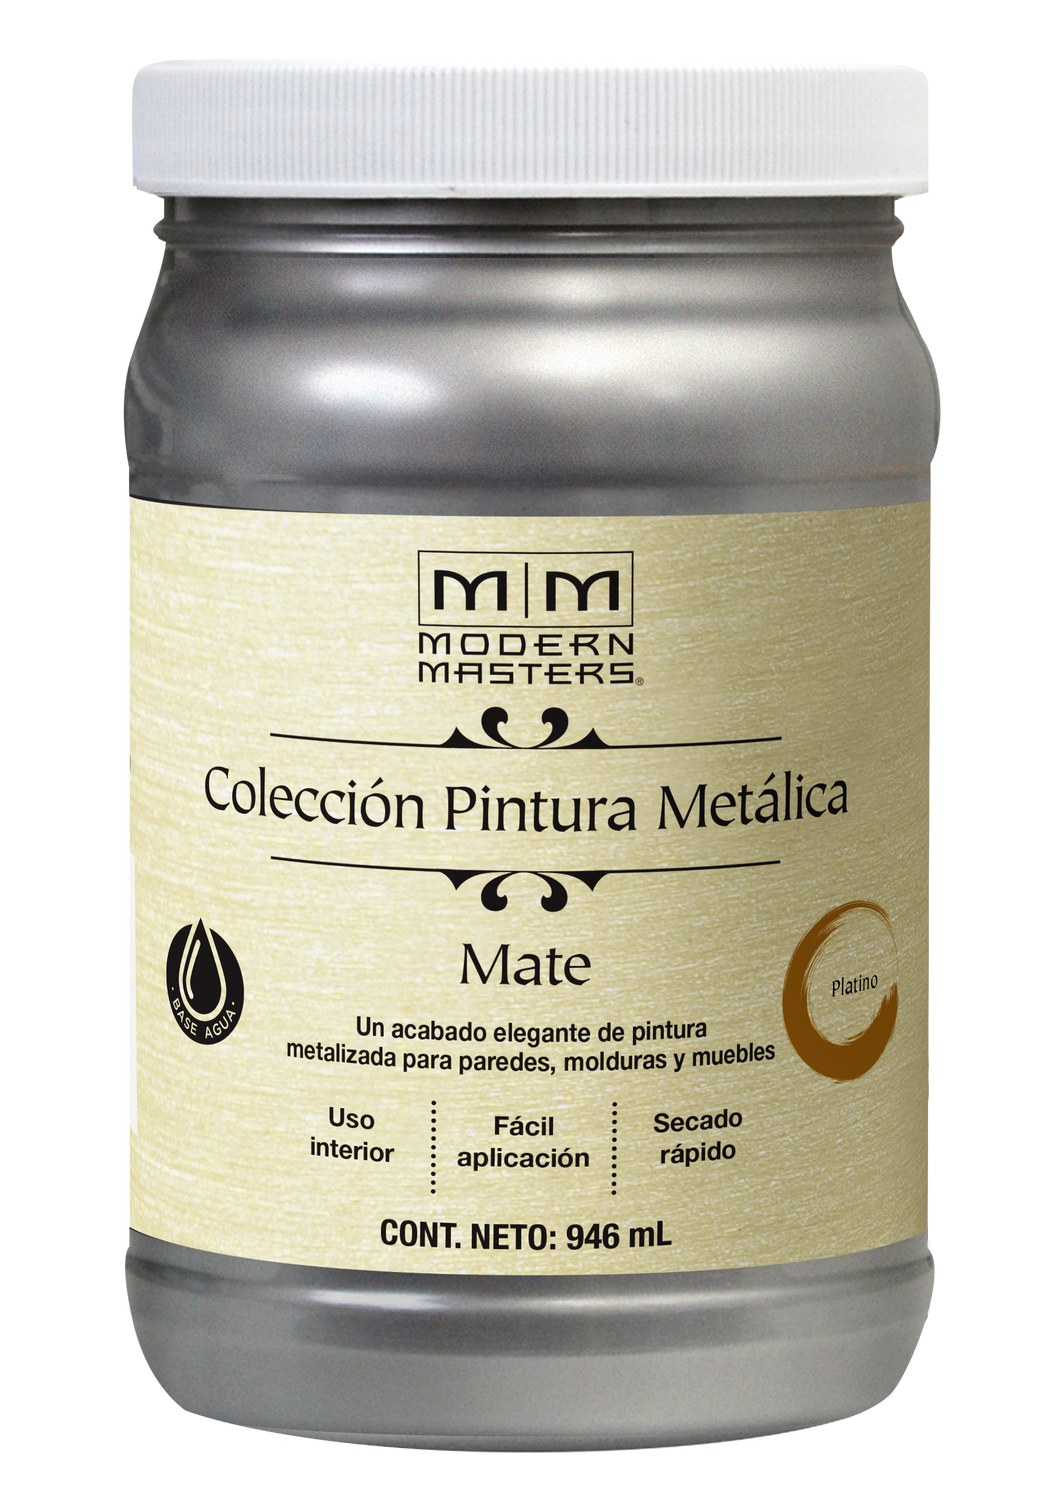 Pintura metalica modern masters platino mate 946ml